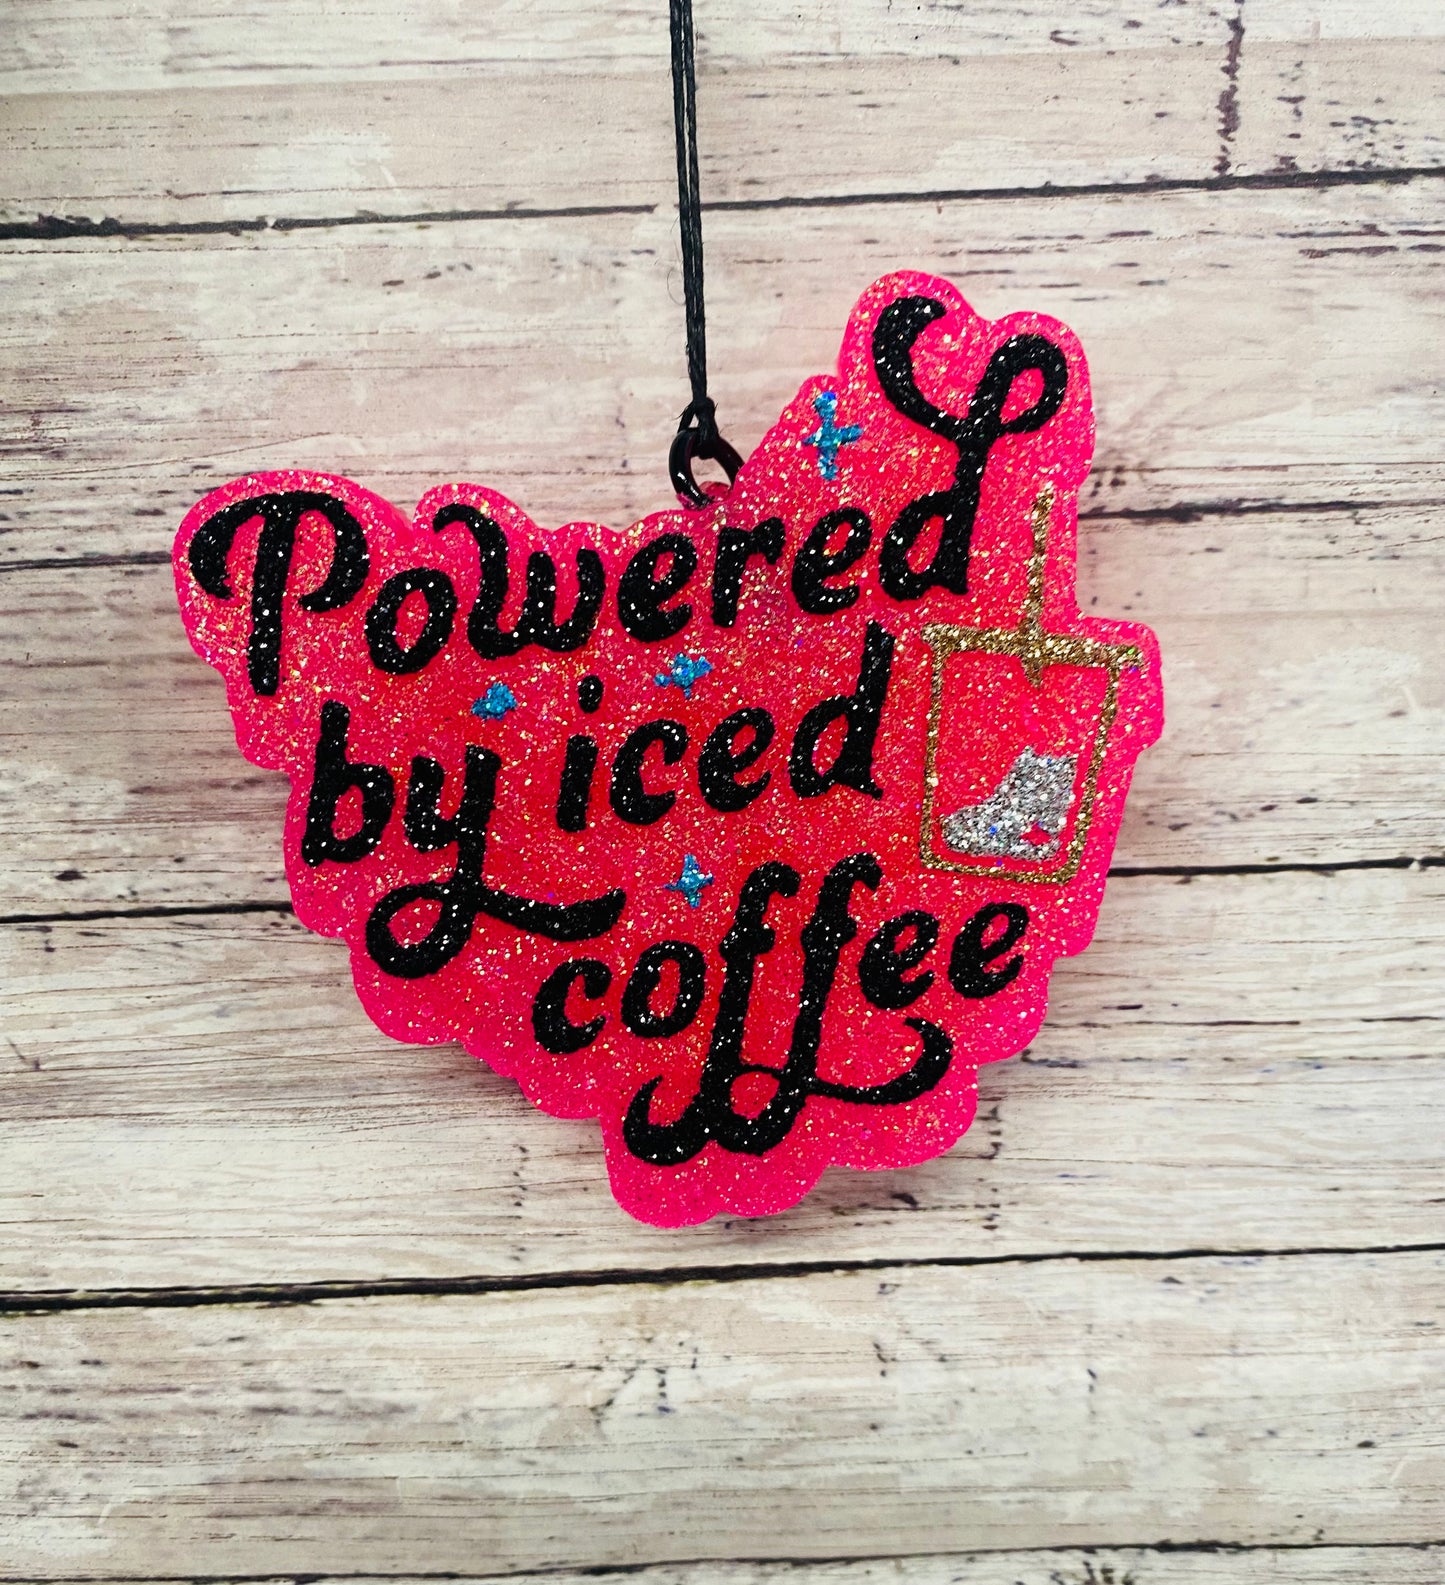 Powered by Iced Coffee